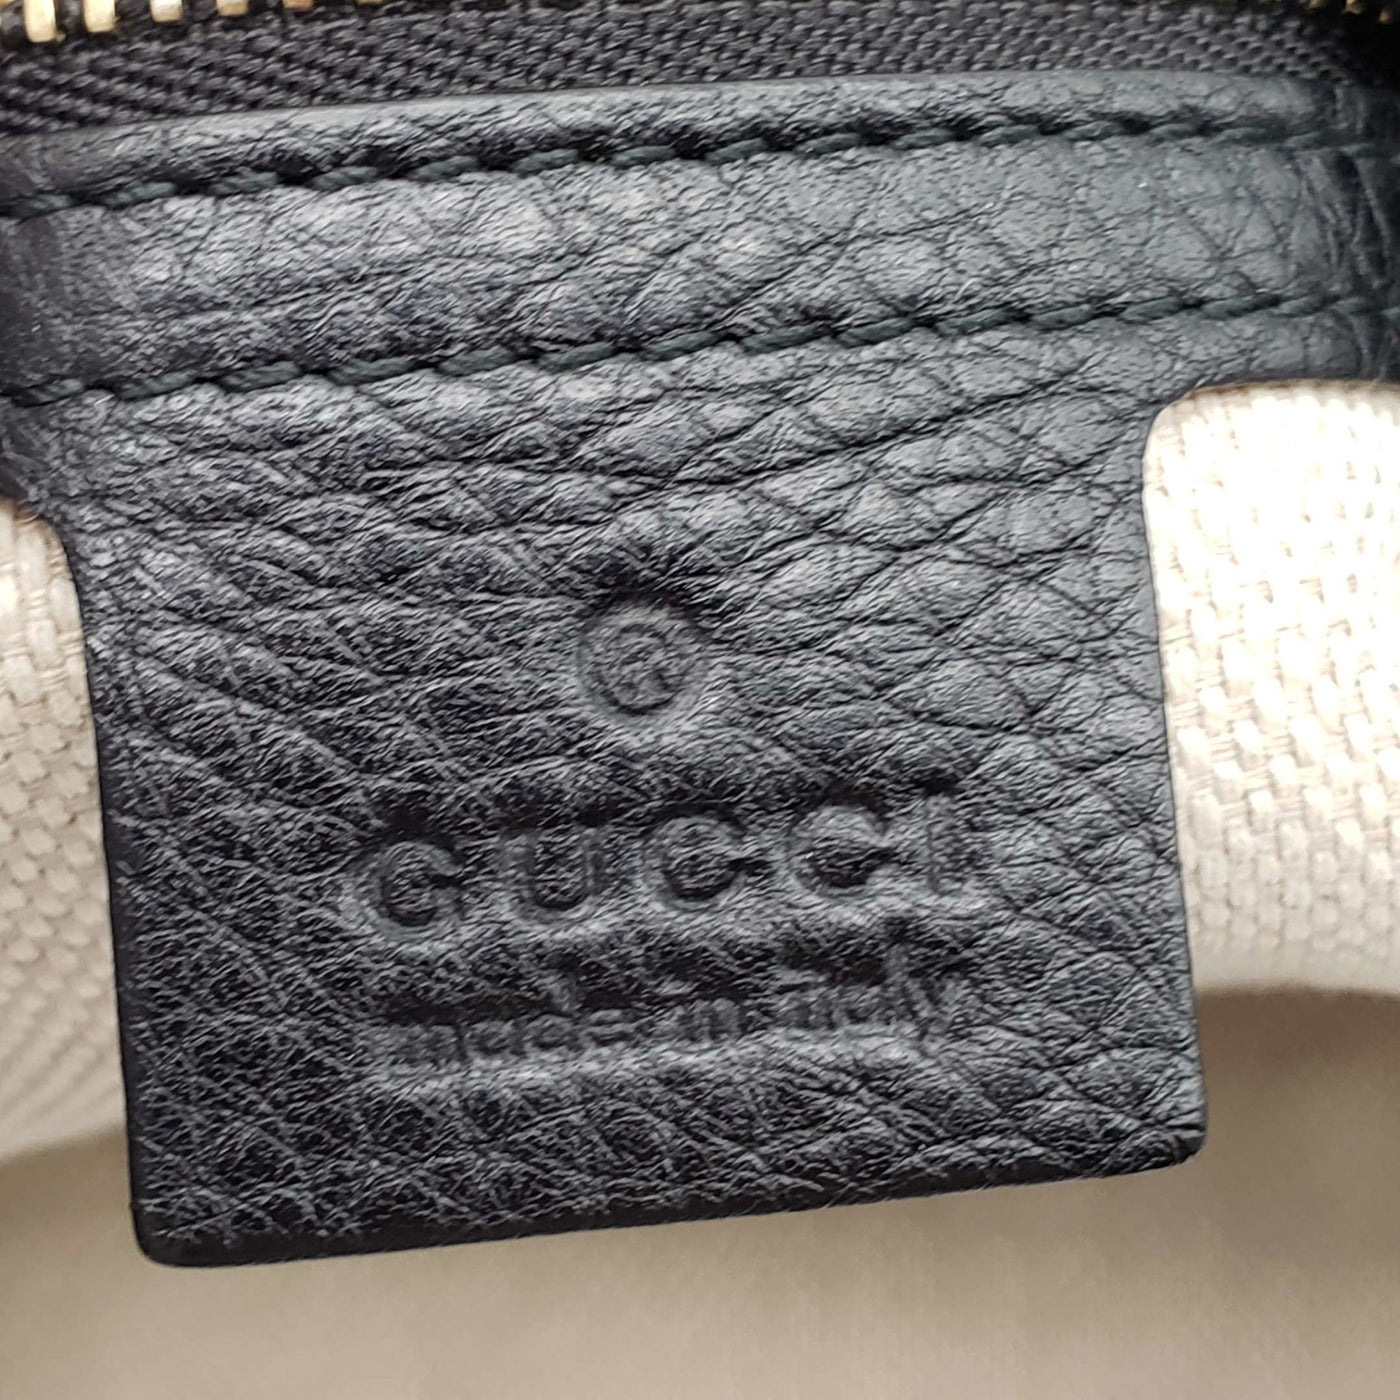 Gucci Soho Large Black Shoulder Bag - Luxury Cheaper